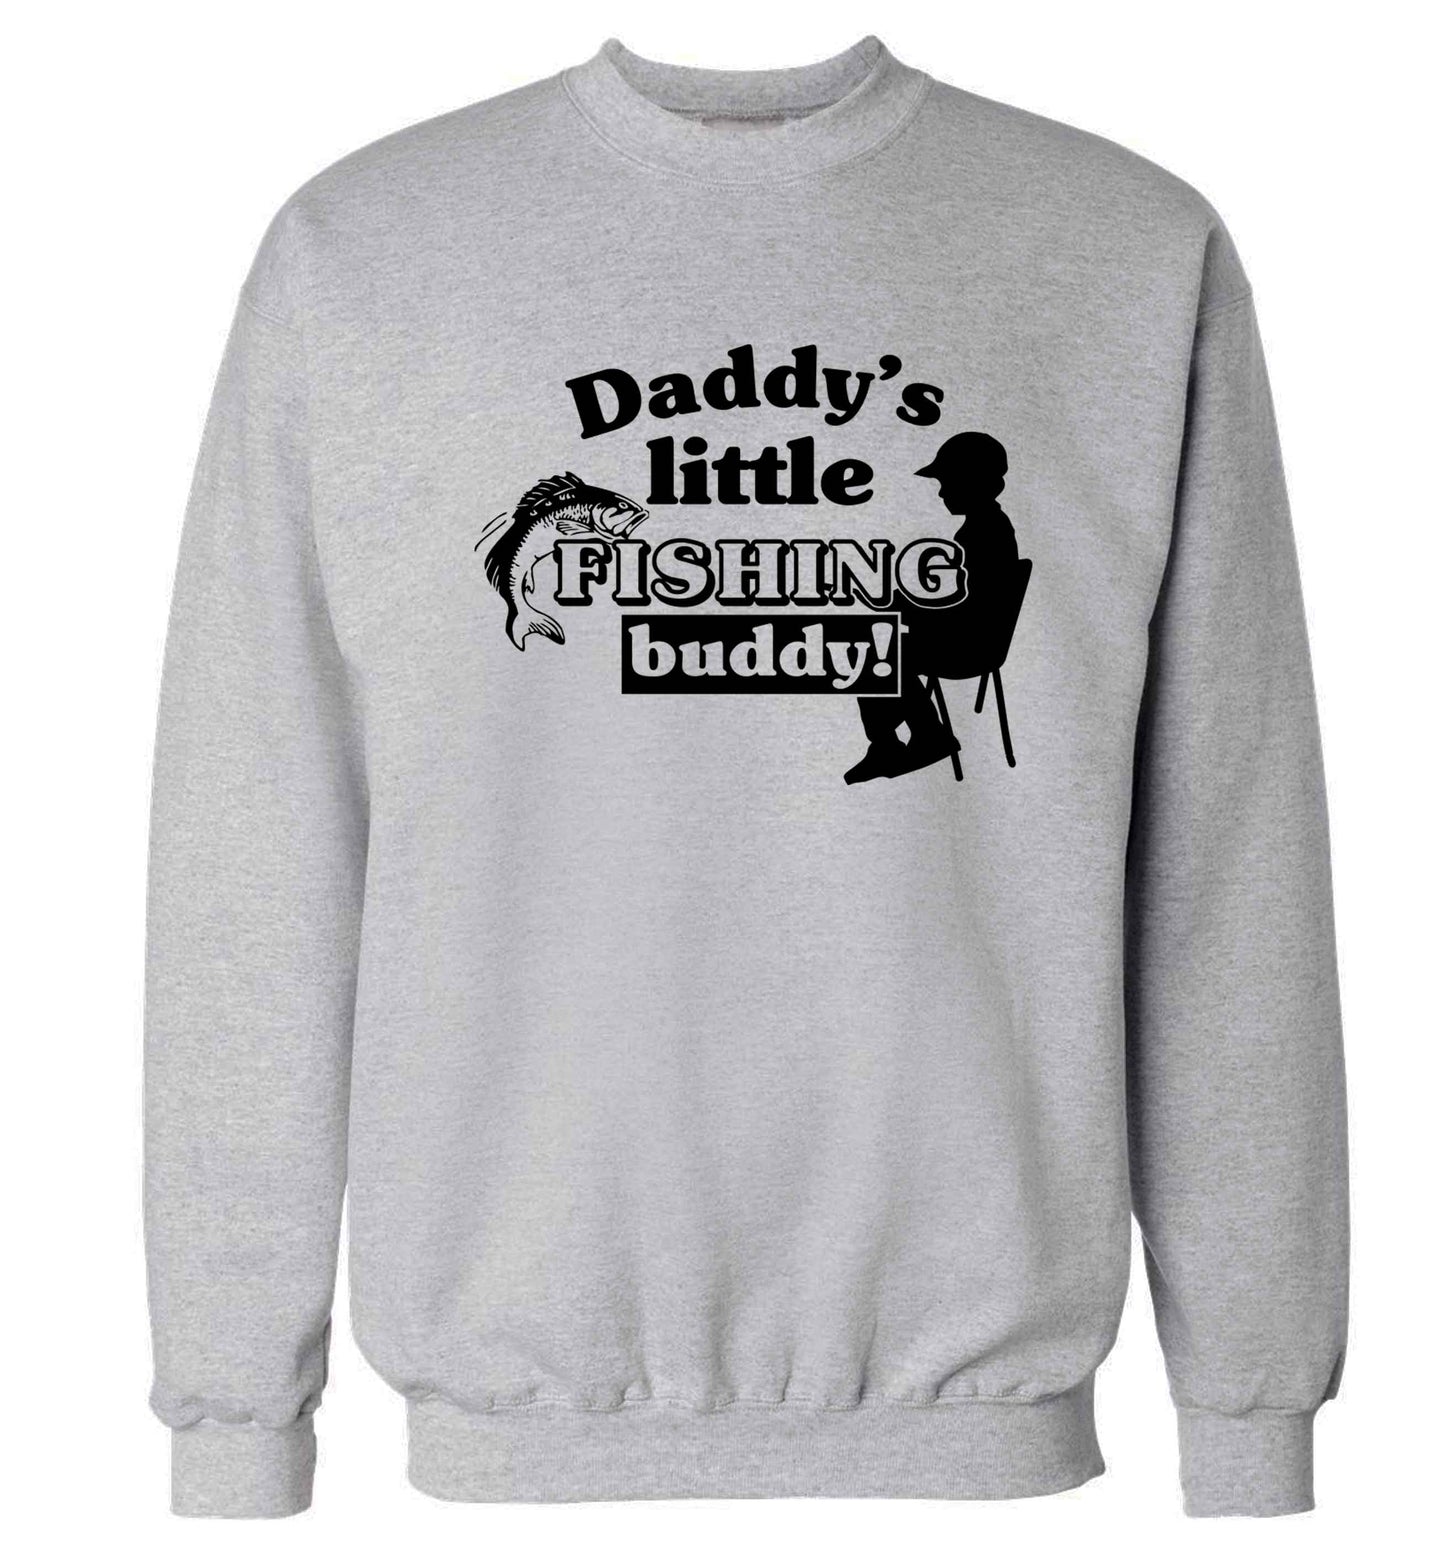 Daddy's little fishing buddy Adult's unisex grey Sweater 2XL